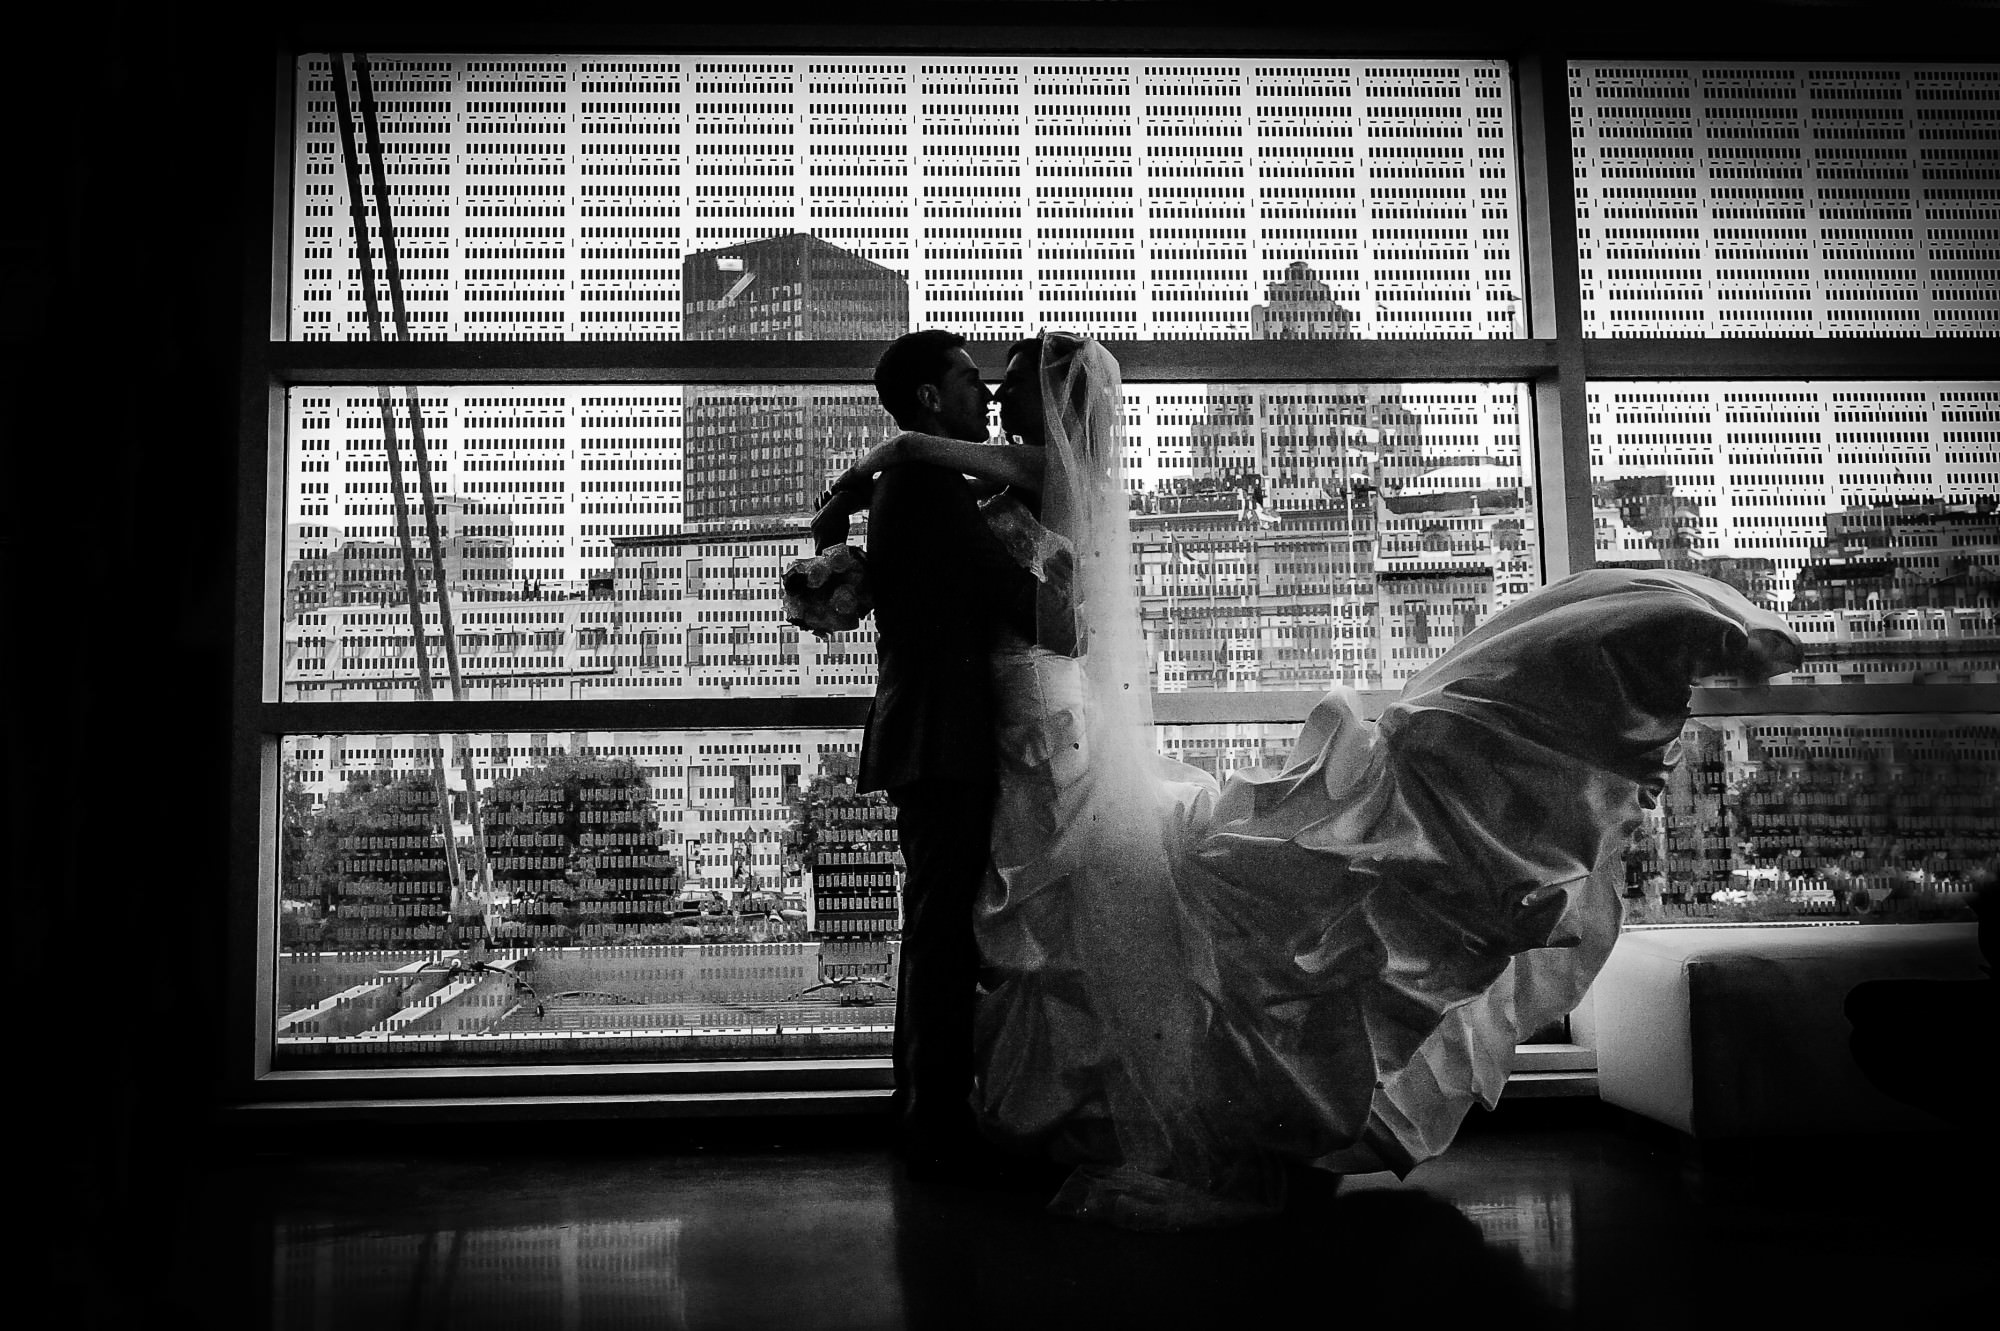 montreal wedding photography lavimage vera varley alesya kornetskaya new york toronto montreal beautiful wedding love couple erika and ivan canadian wedding best wedding photos